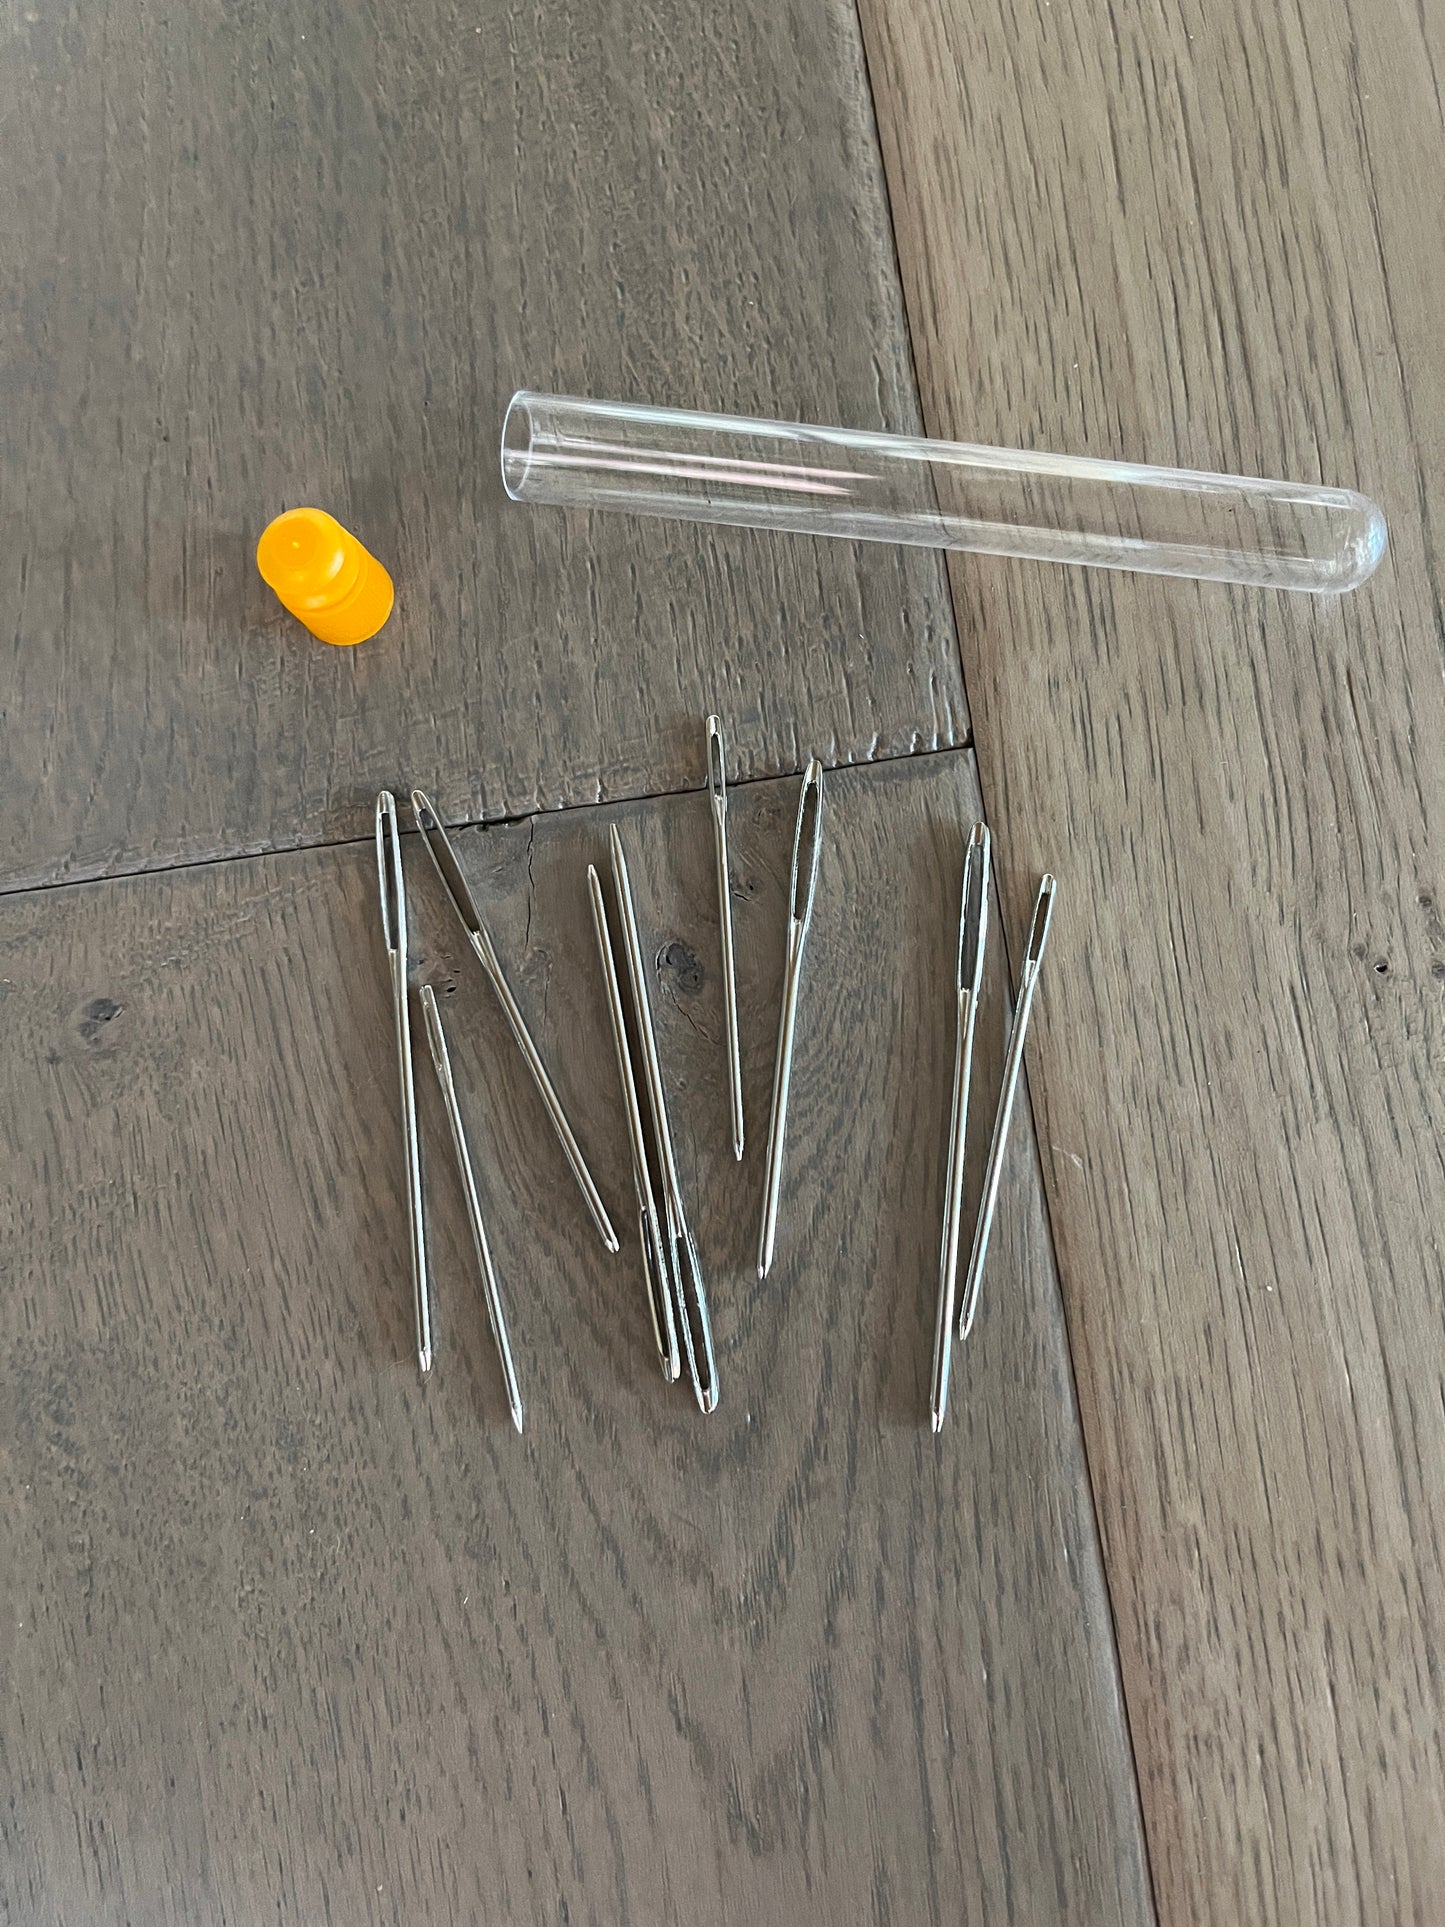 Metal Yarn Needles